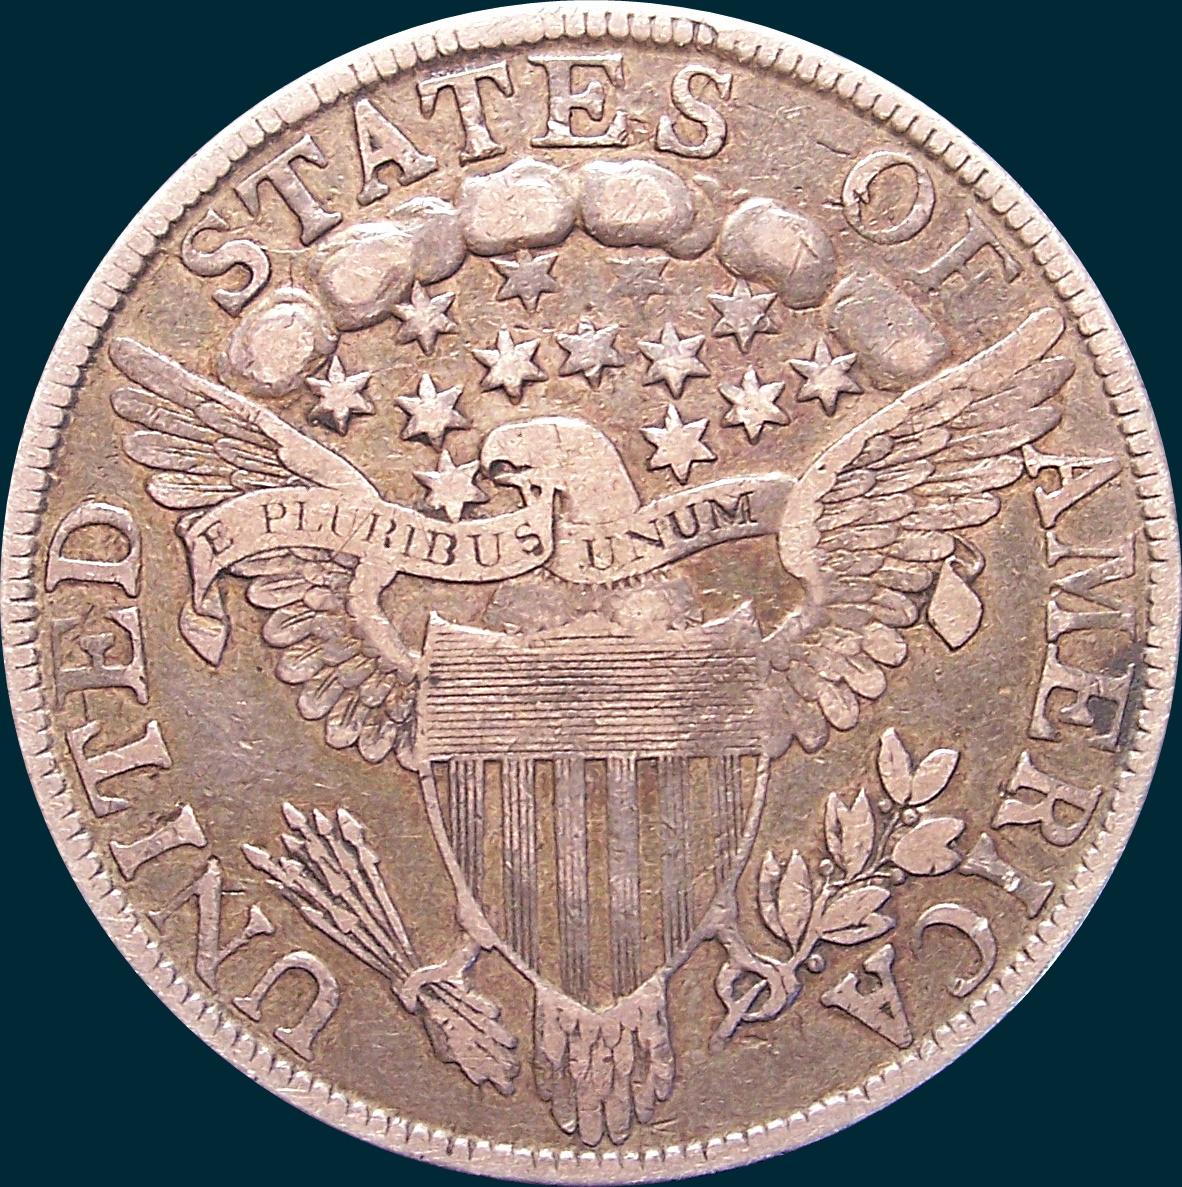 1805, O-112, Draped Bust, Half dollar